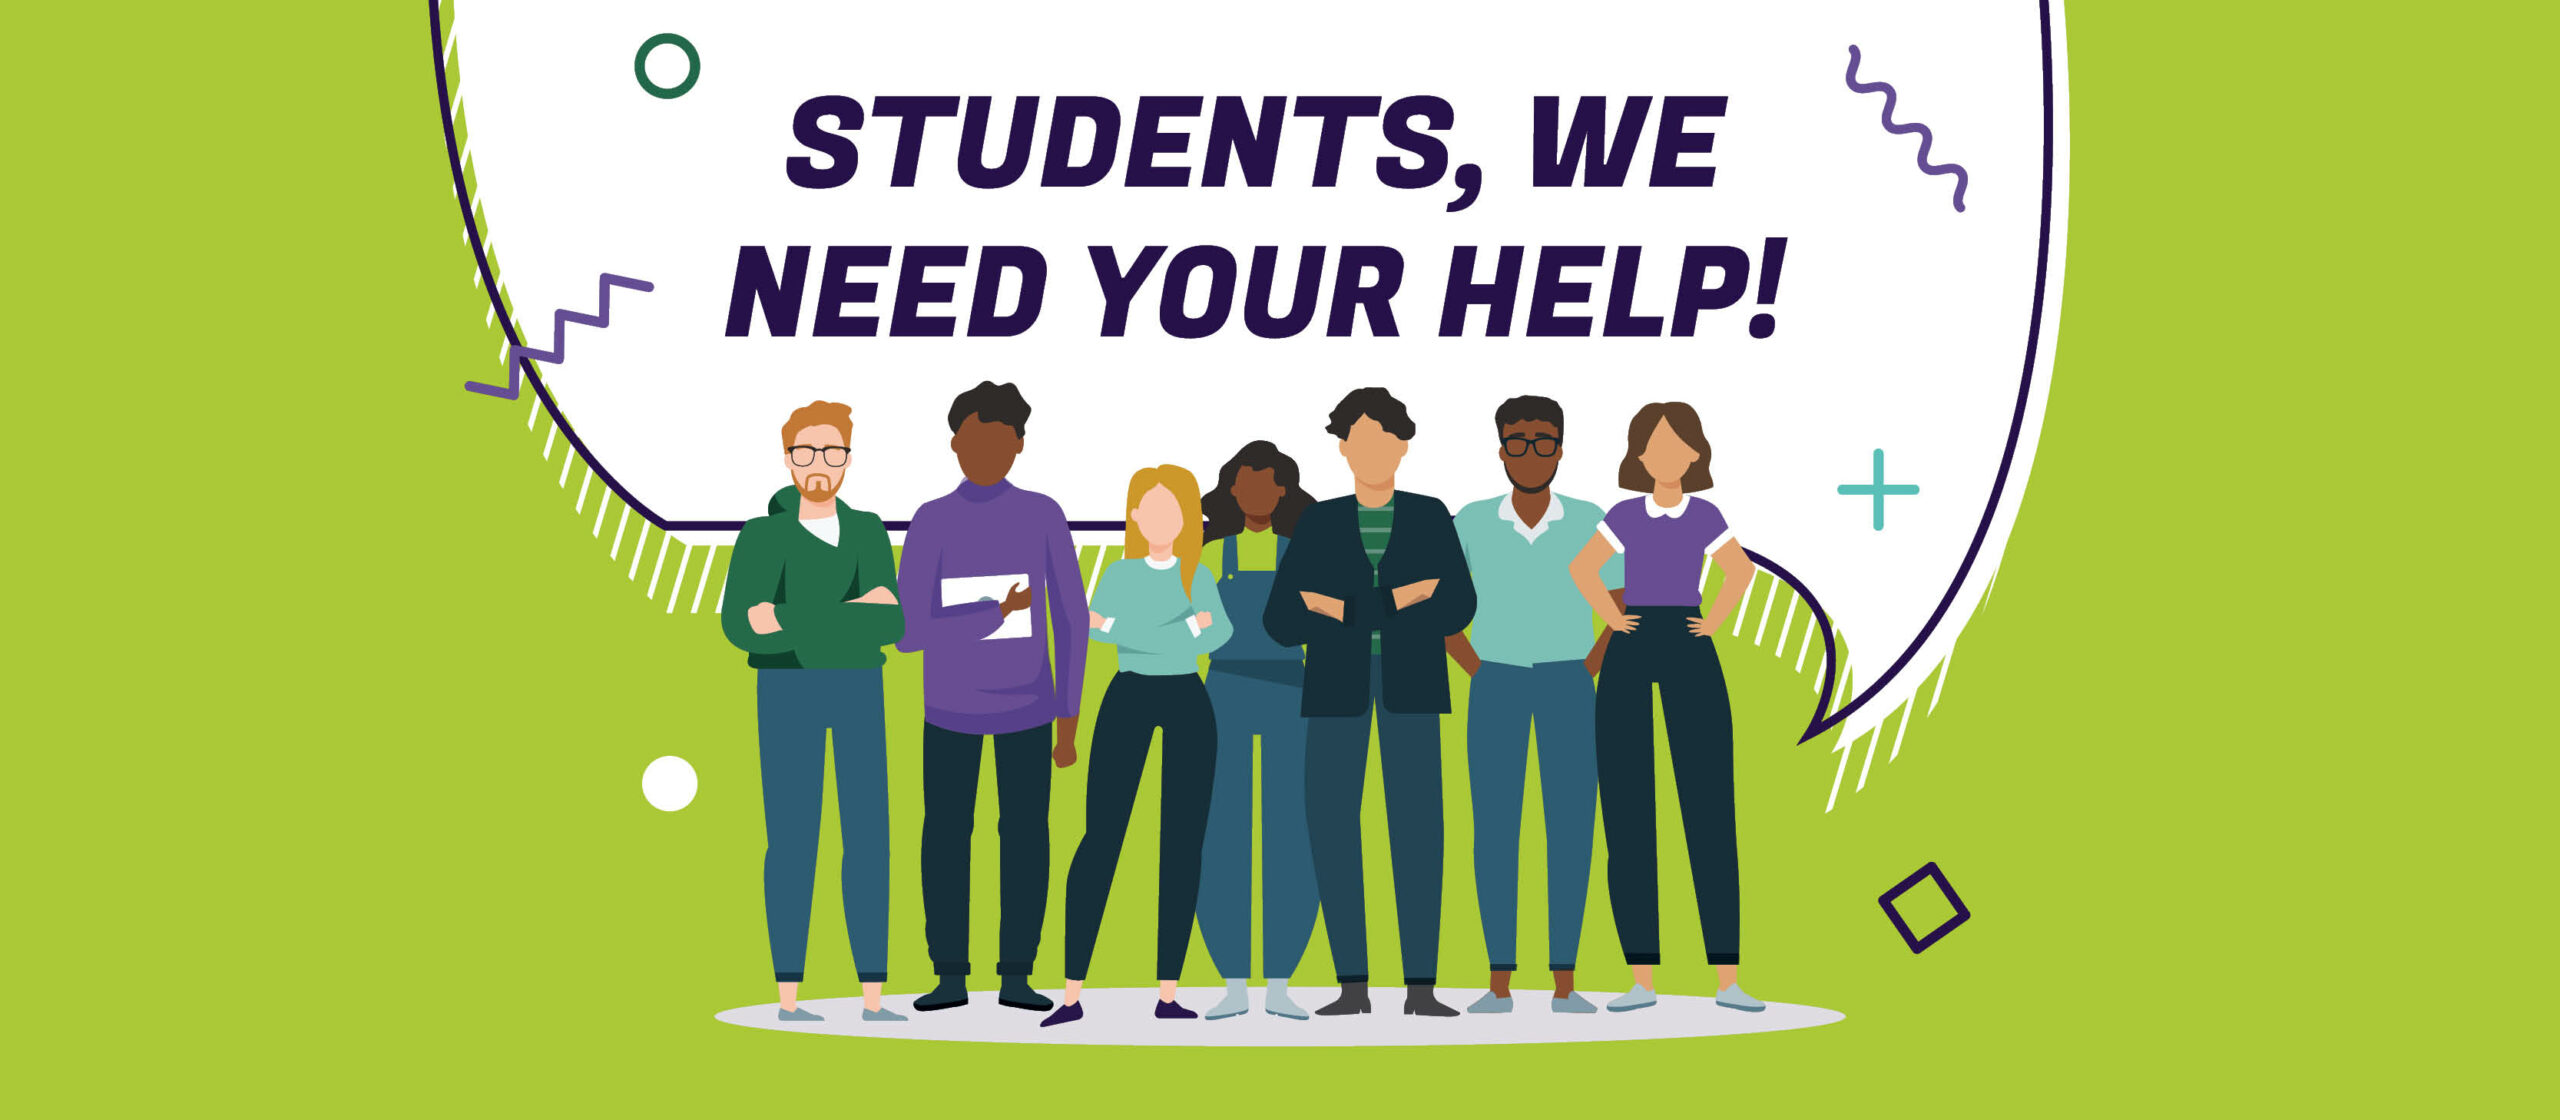 Students, we need your help!